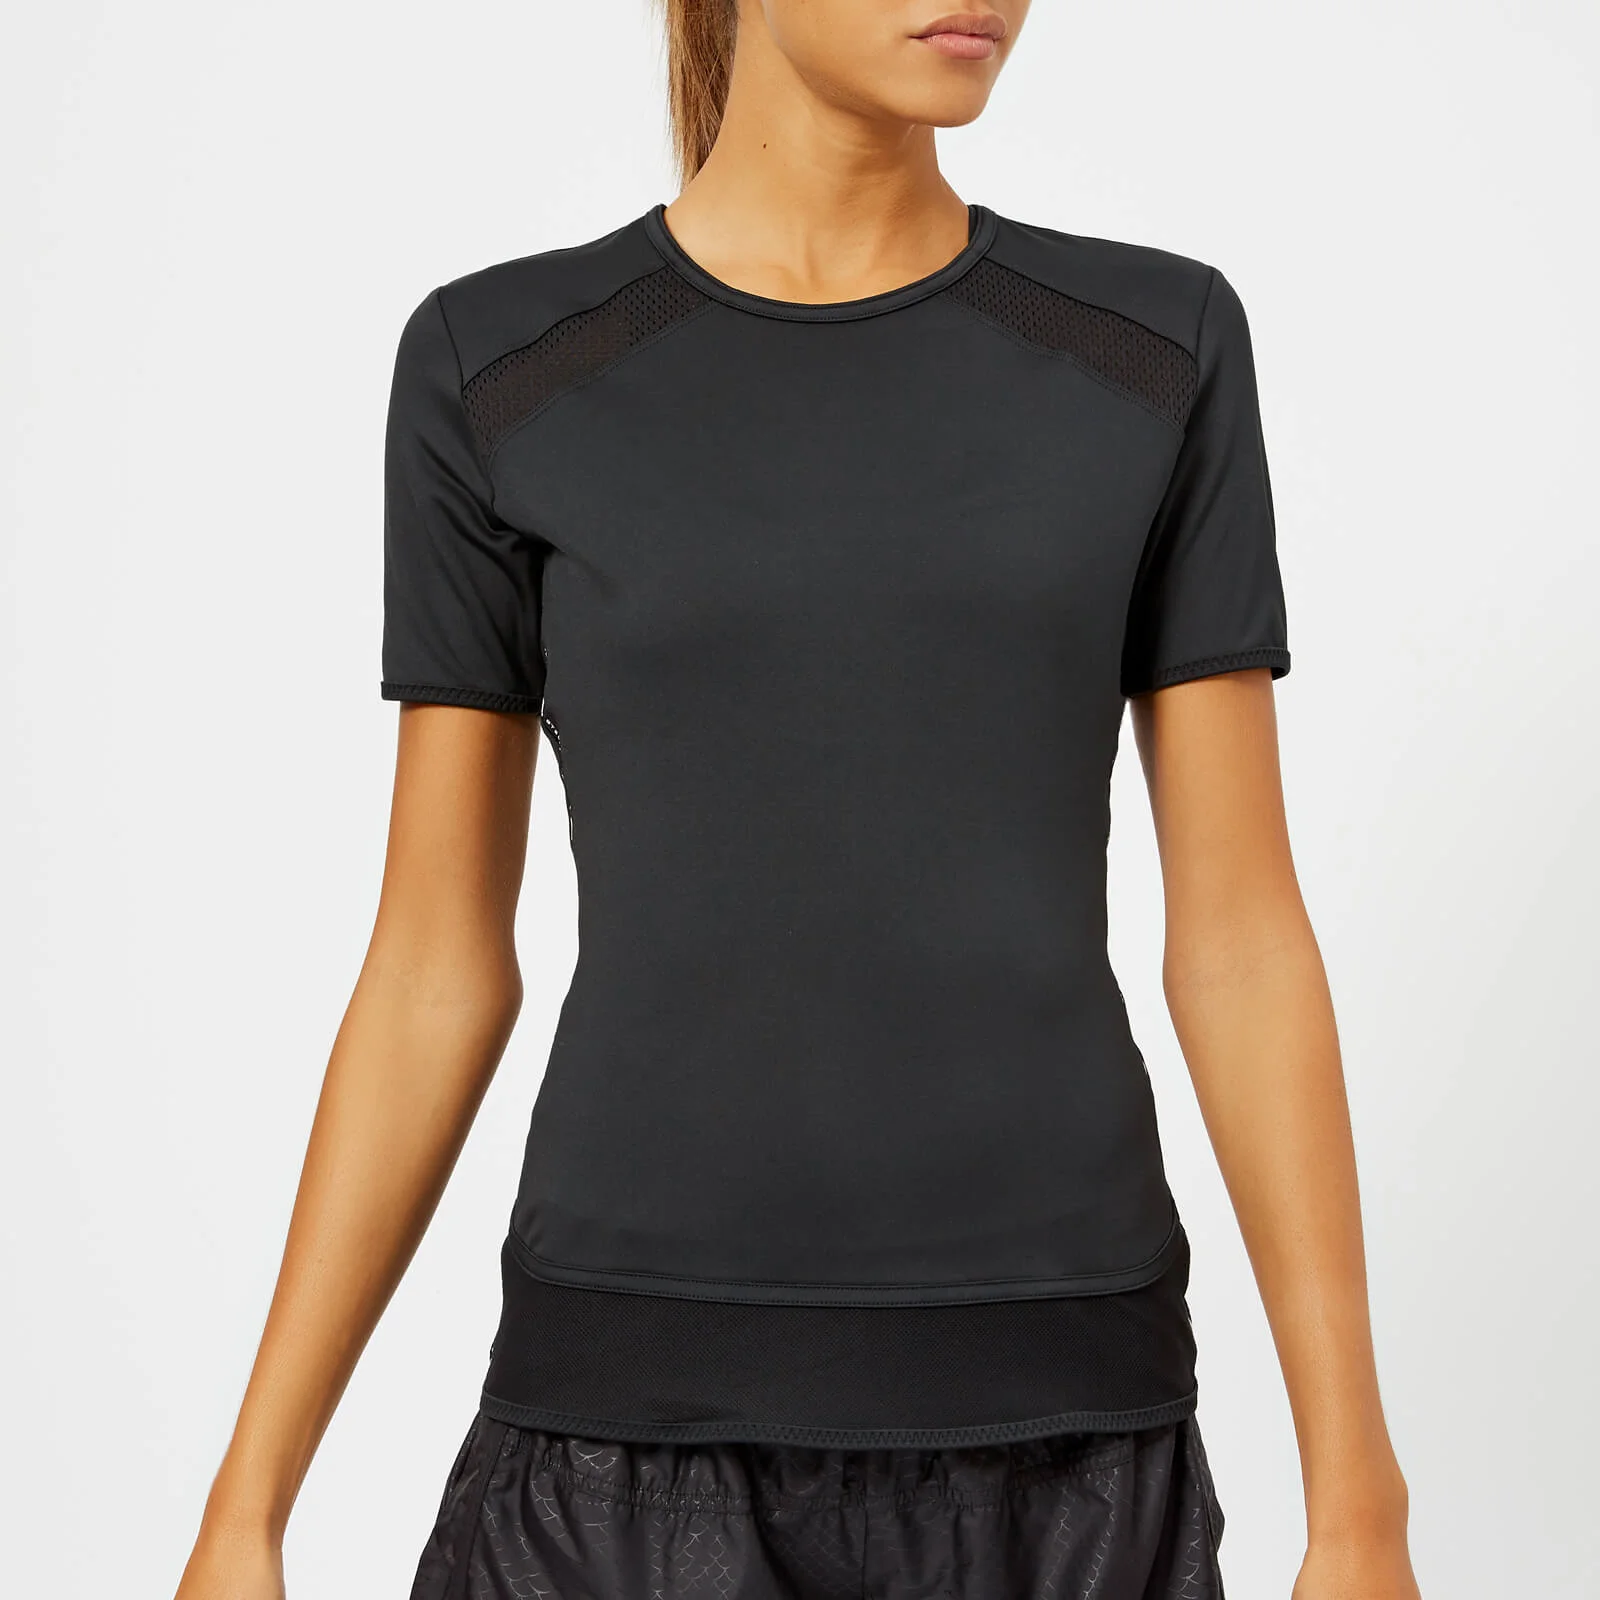 adidas by Stella McCartney Women's Essential Short Sleeve T-Shirt - Black Image 1